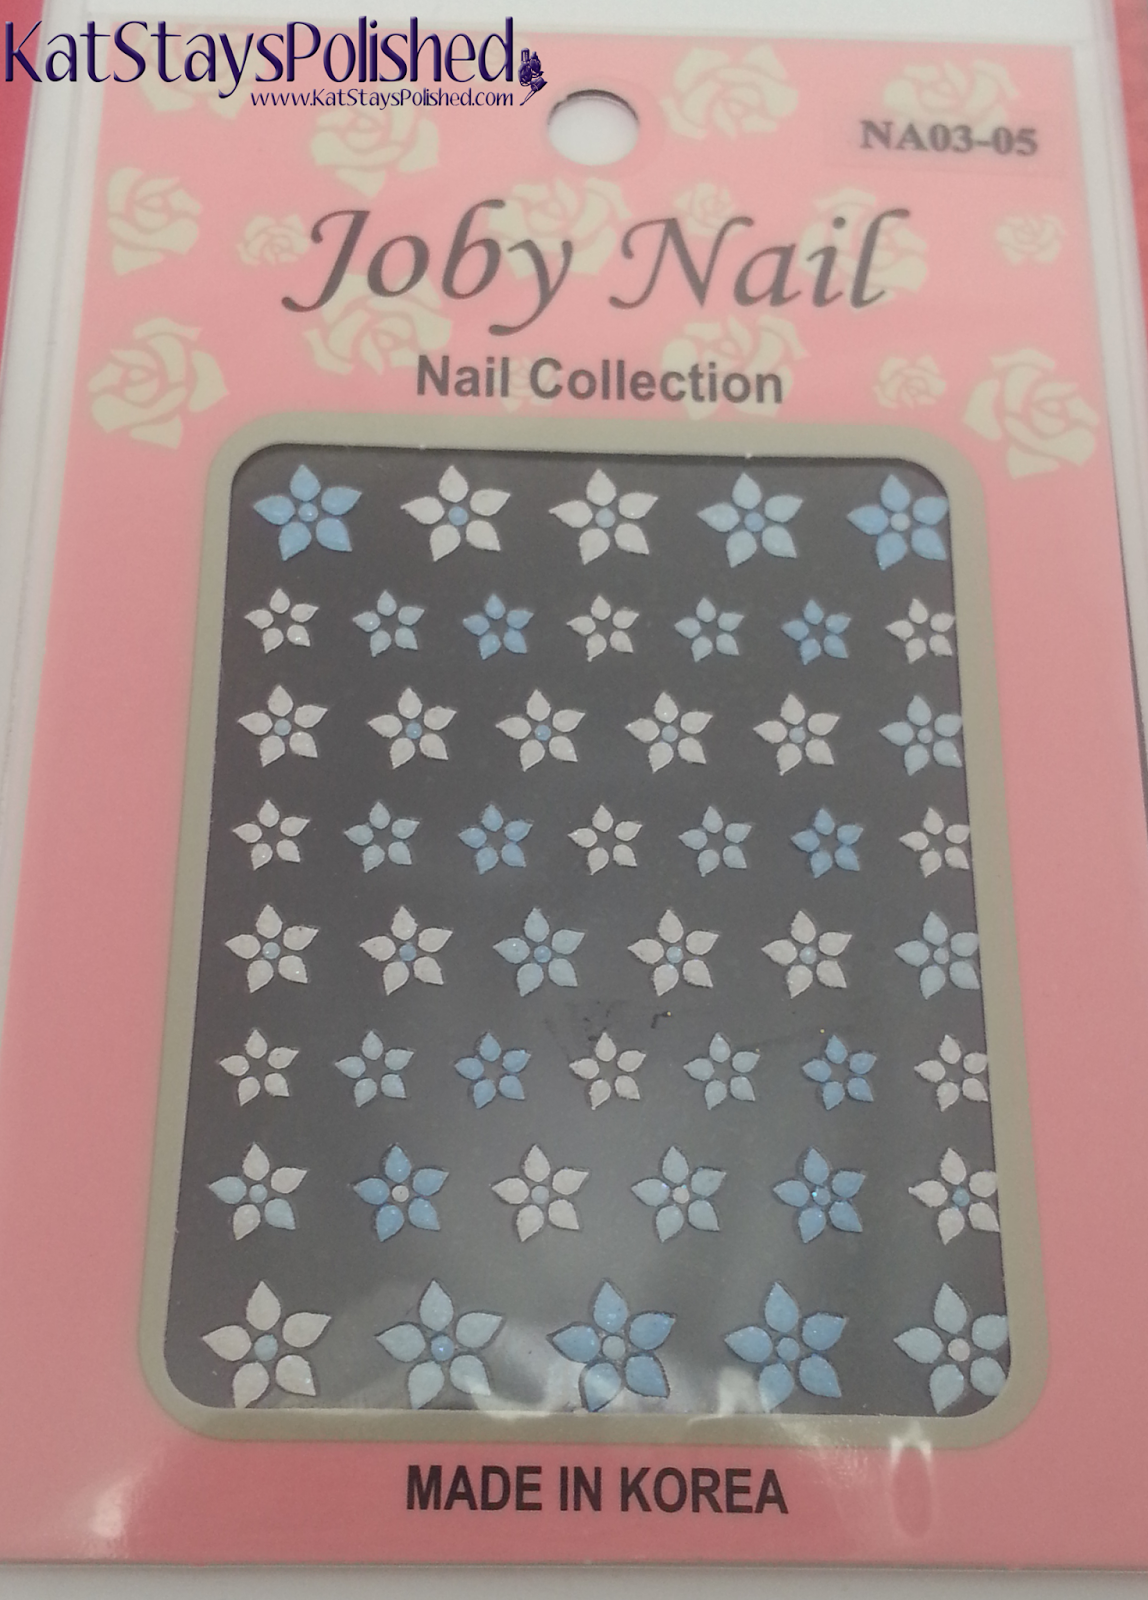 Joby Nail Art Stickers | Kat Stays Polished